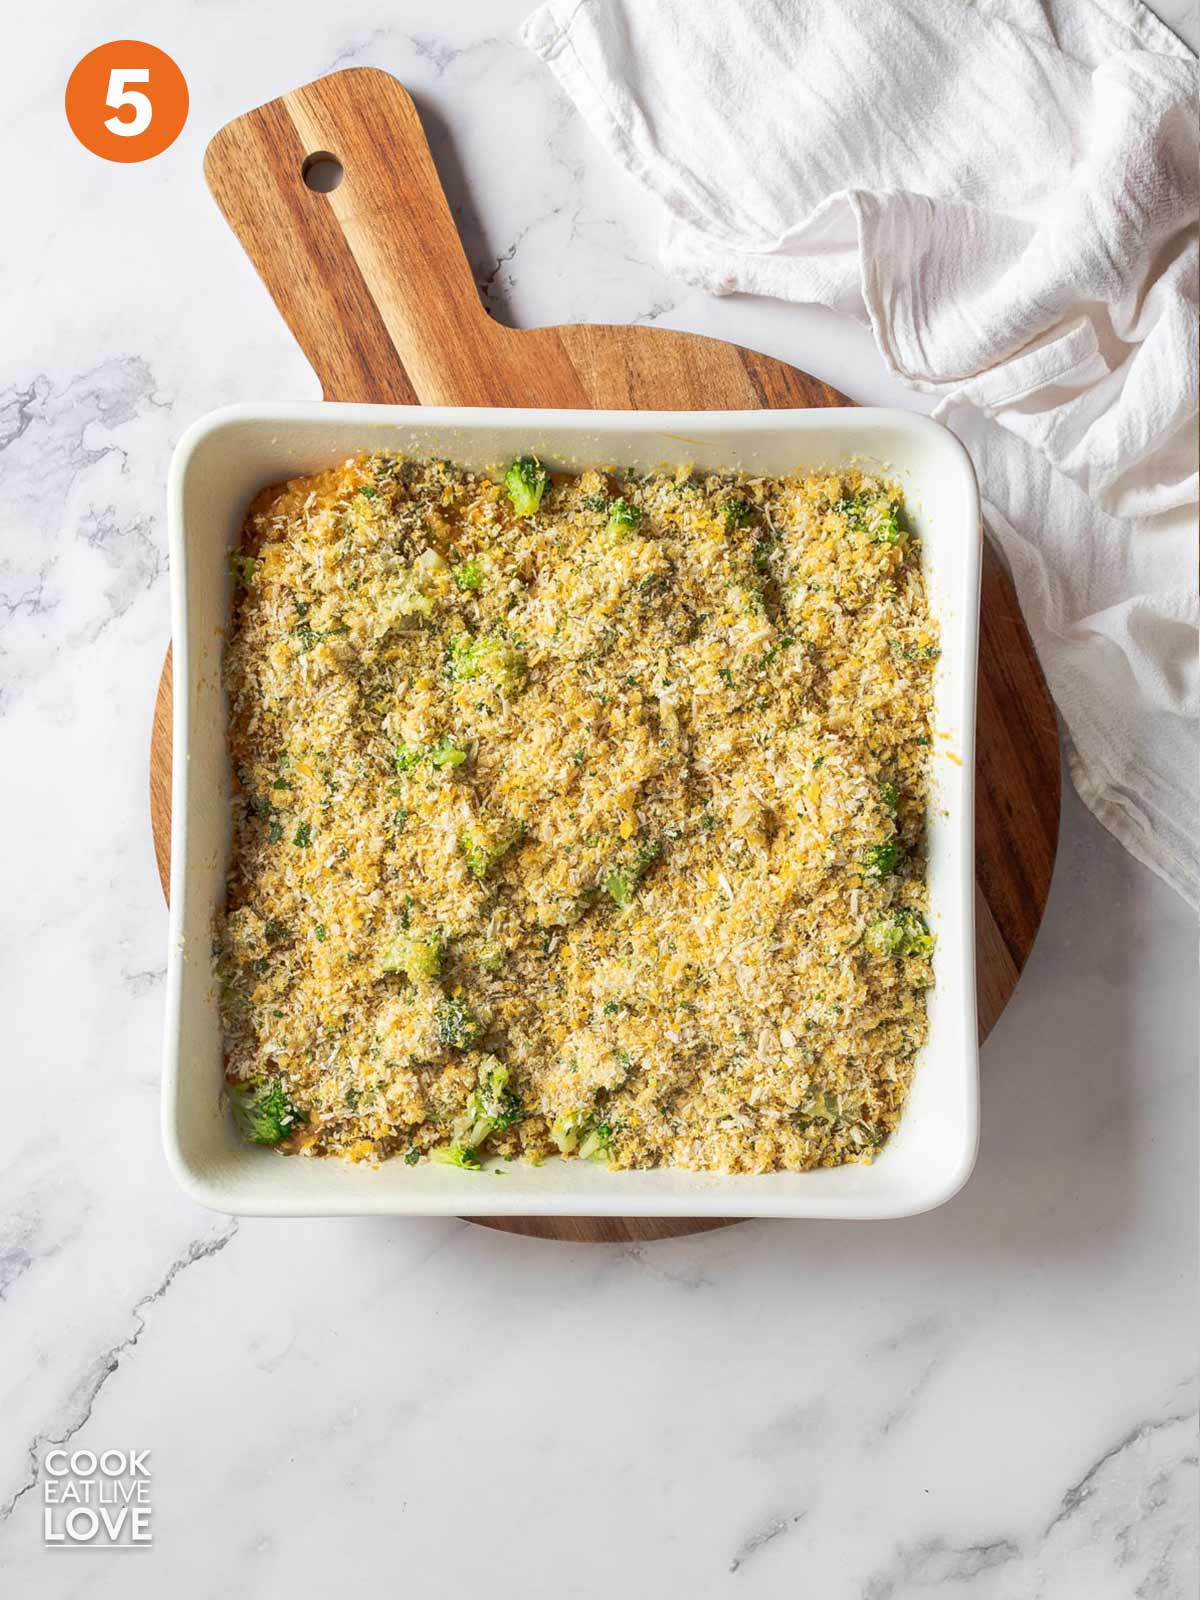 Cheesy broccoli quinoa in the casserole dish with panko topping.